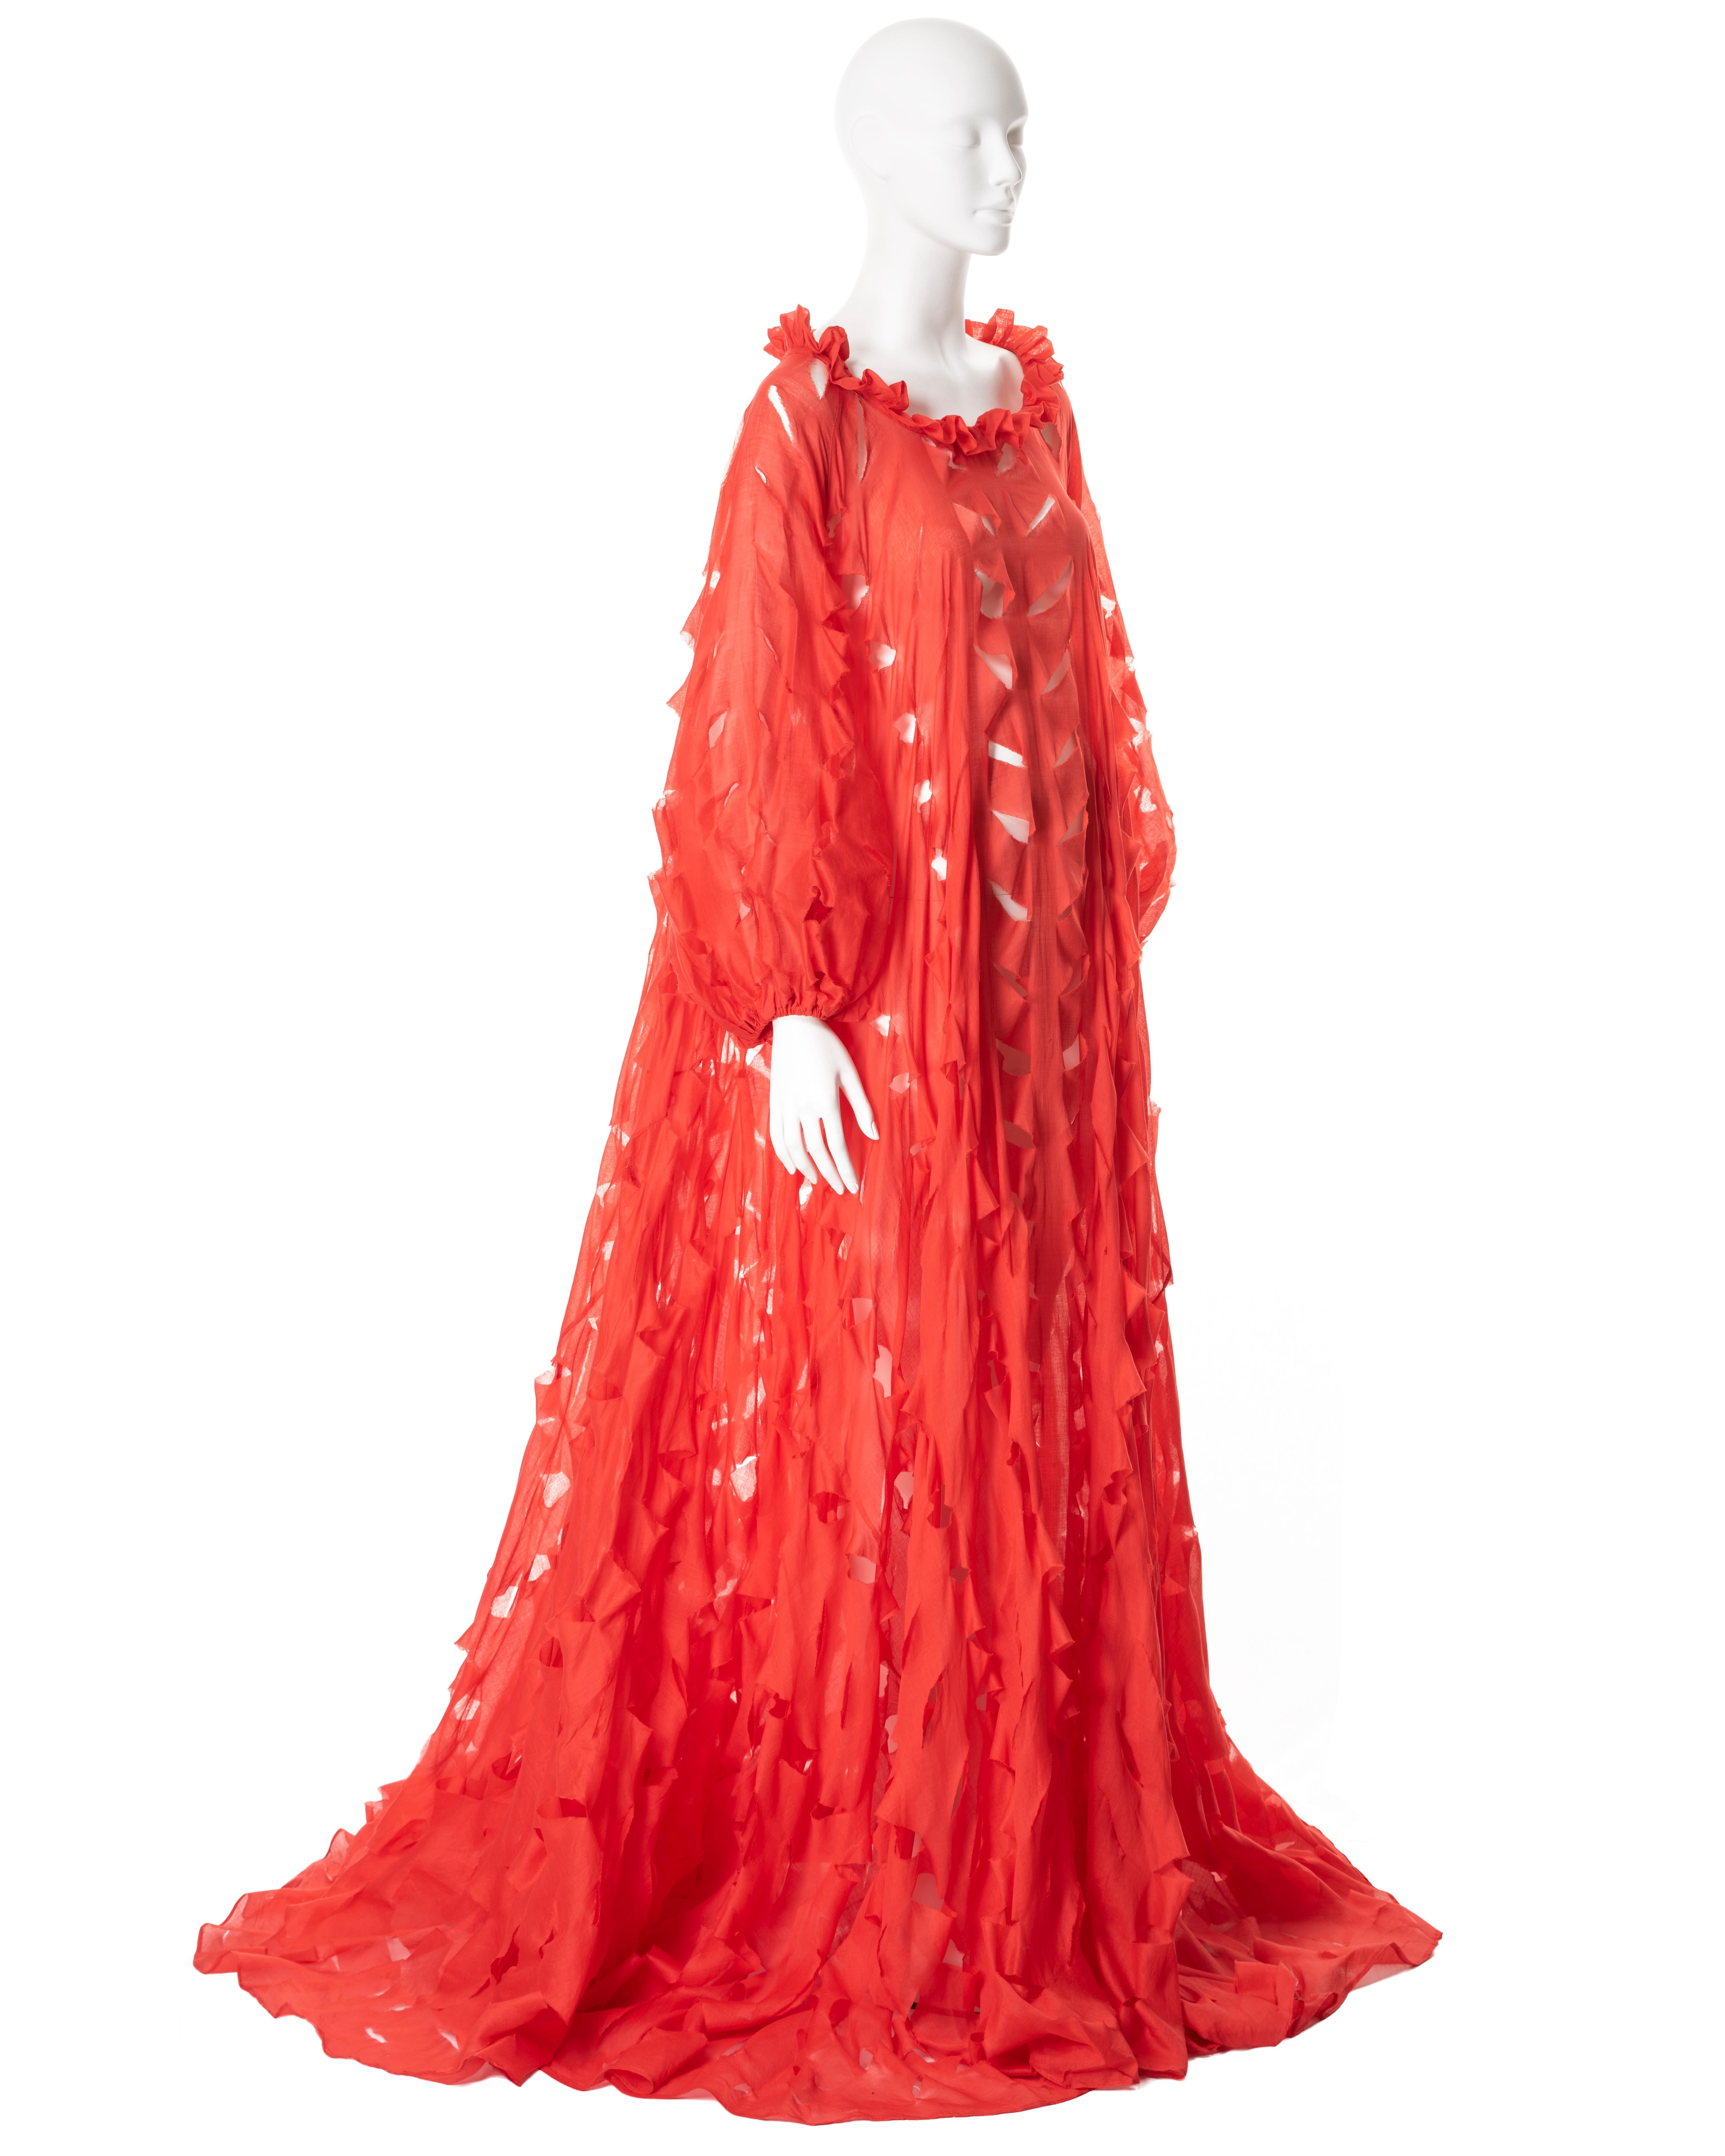 Vivienne Westwood hand-cut red cotton circle-cut dress, ss 1991 For Sale 3